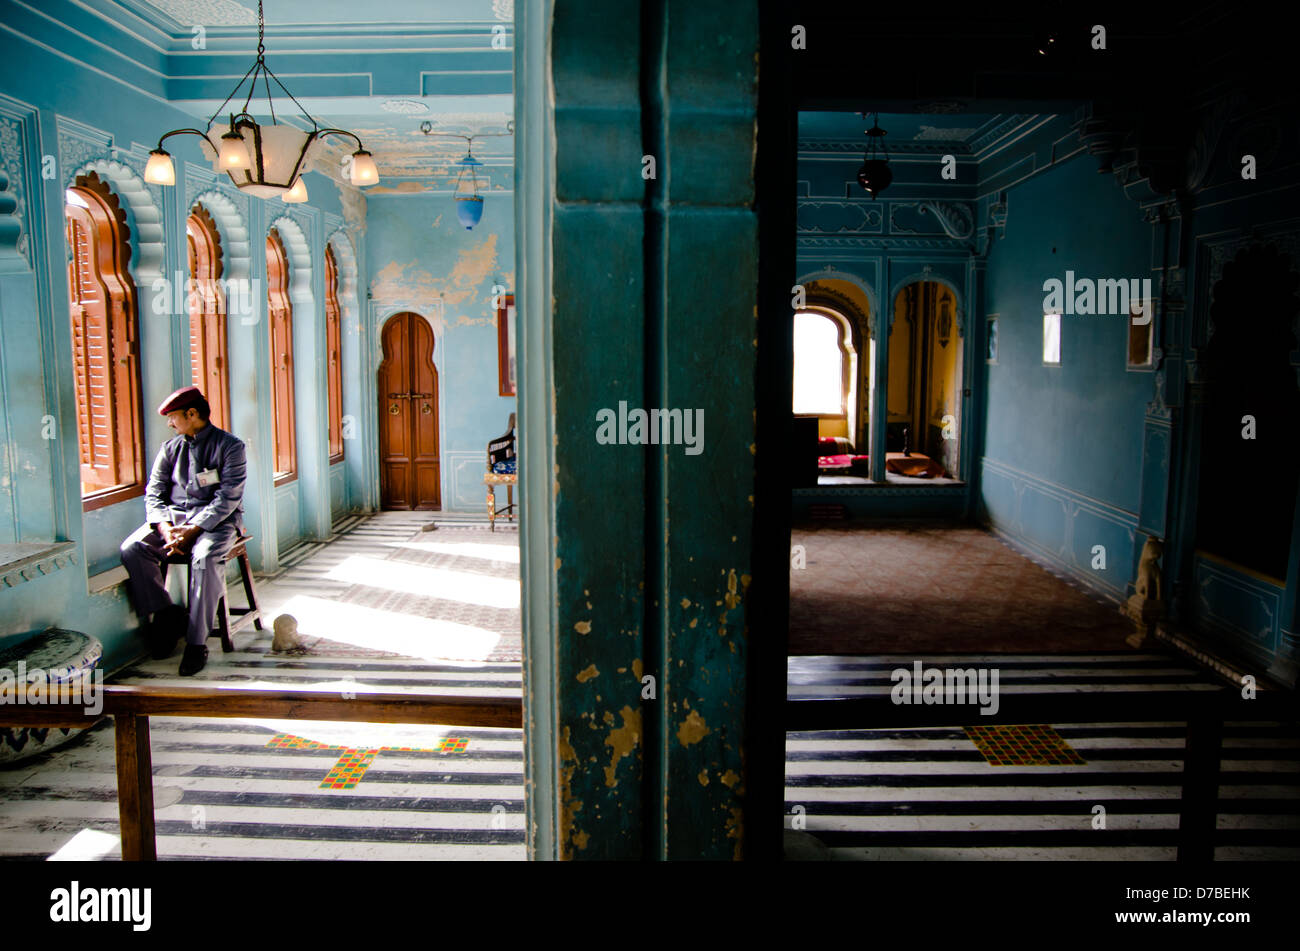 Palazzo di Città, UDAIPUR, India - 14 gennaio: interni di palazzo del 14 gennaio 2013 in Udaipur. Foto Stock